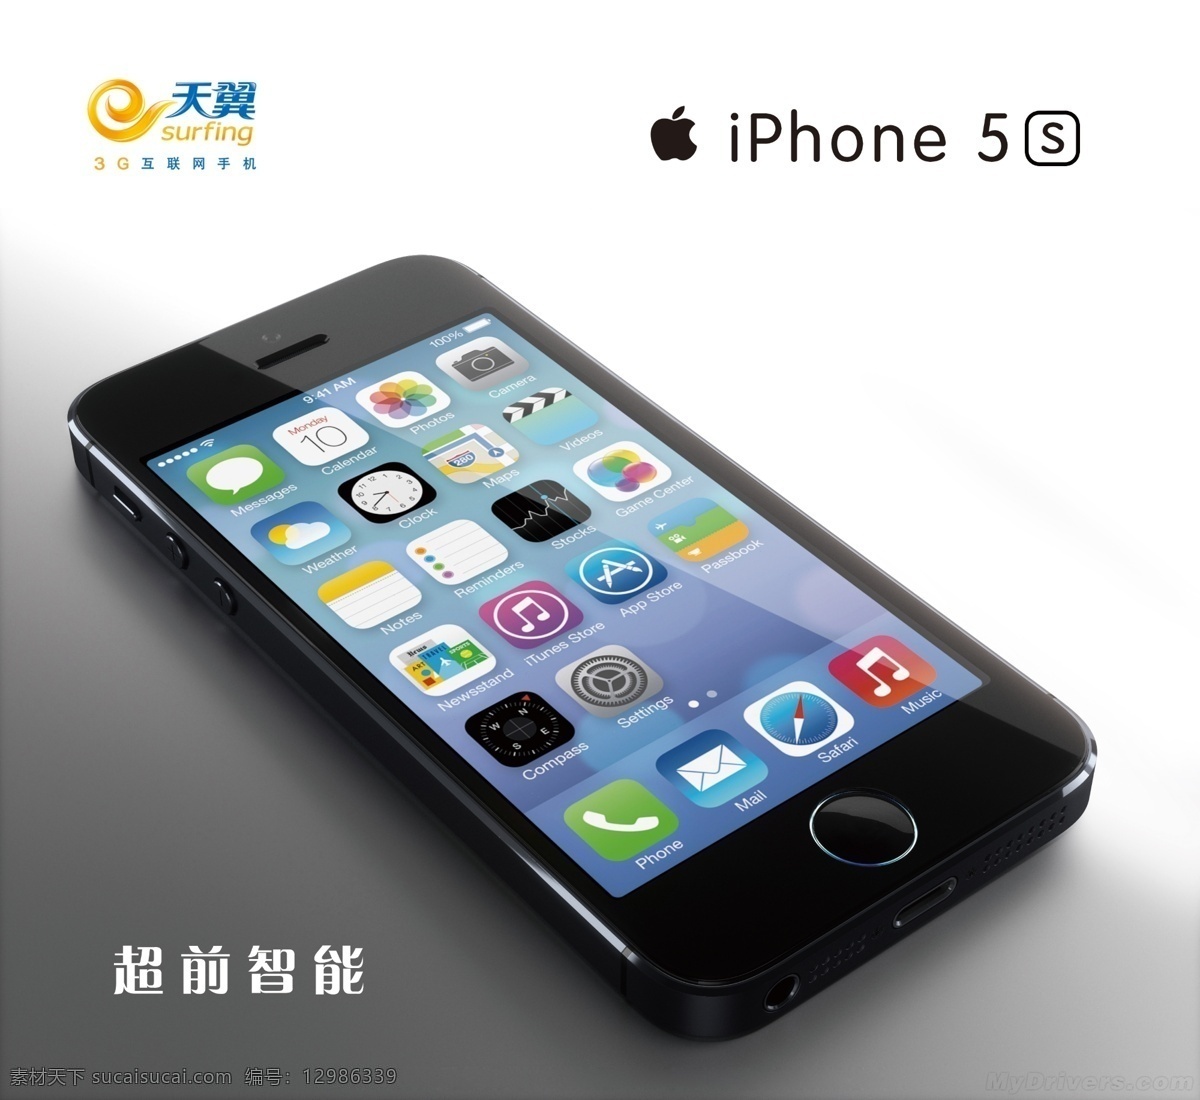 5s iphone 广告设计模板 苹果5s 苹果5s海报 源文件 苹果 海报 模板下载 电信版 电信苹果 其他海报设计